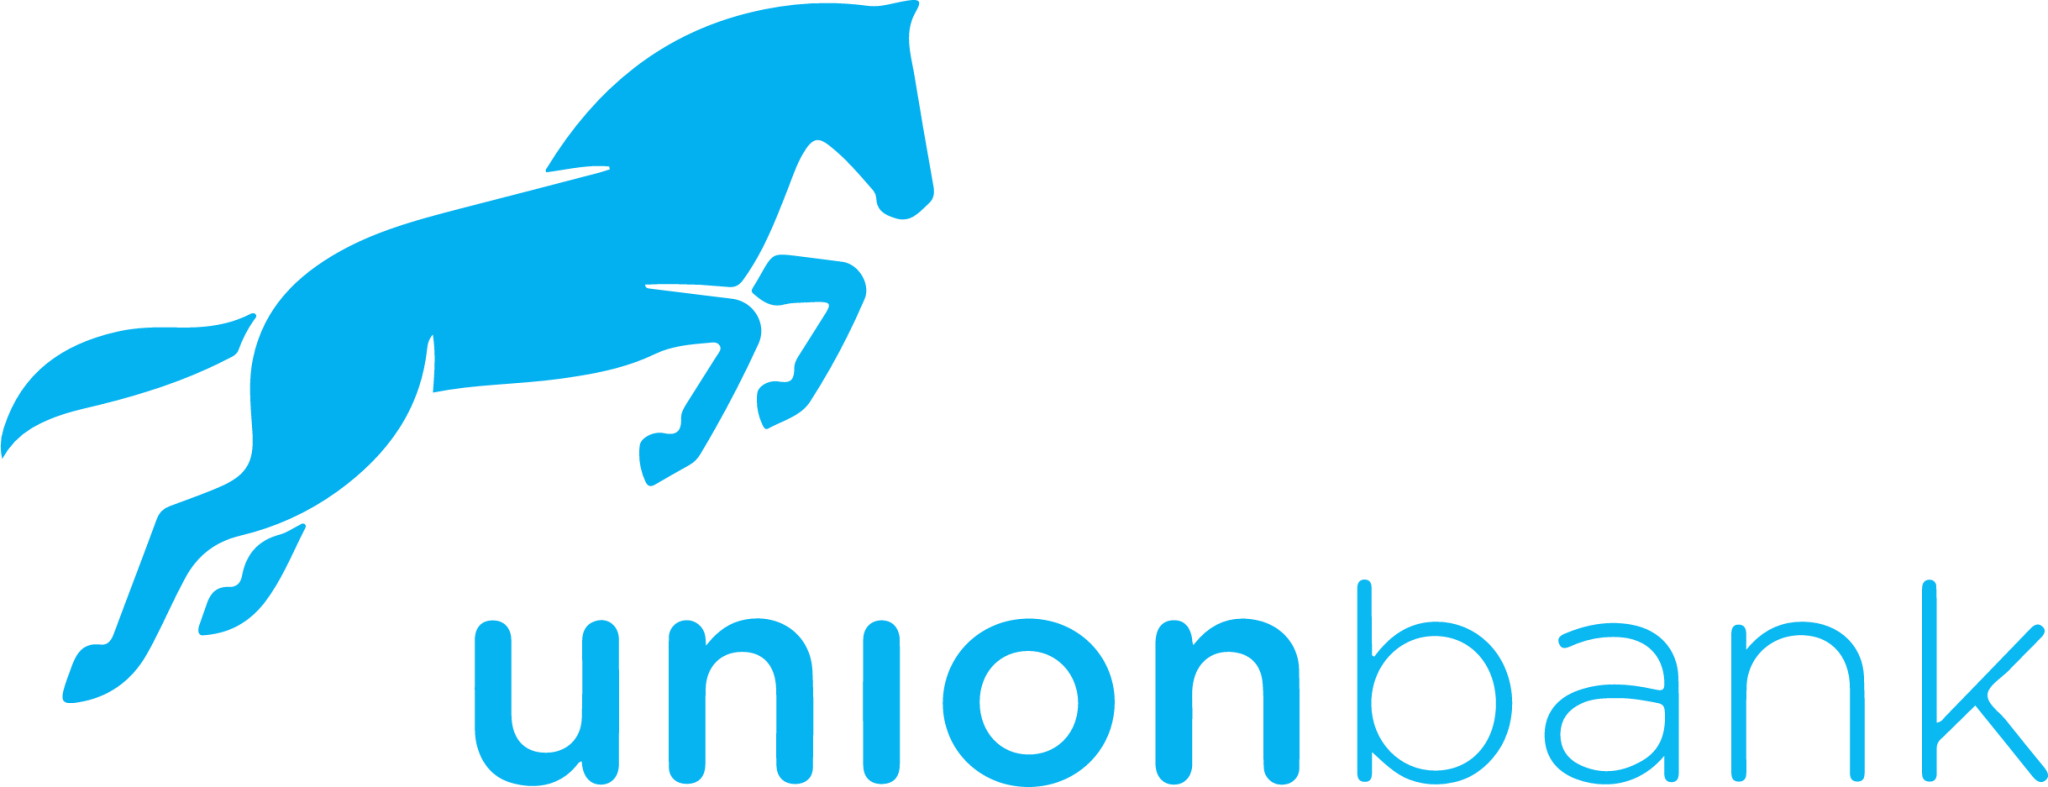 Union Bank Nigeria icon